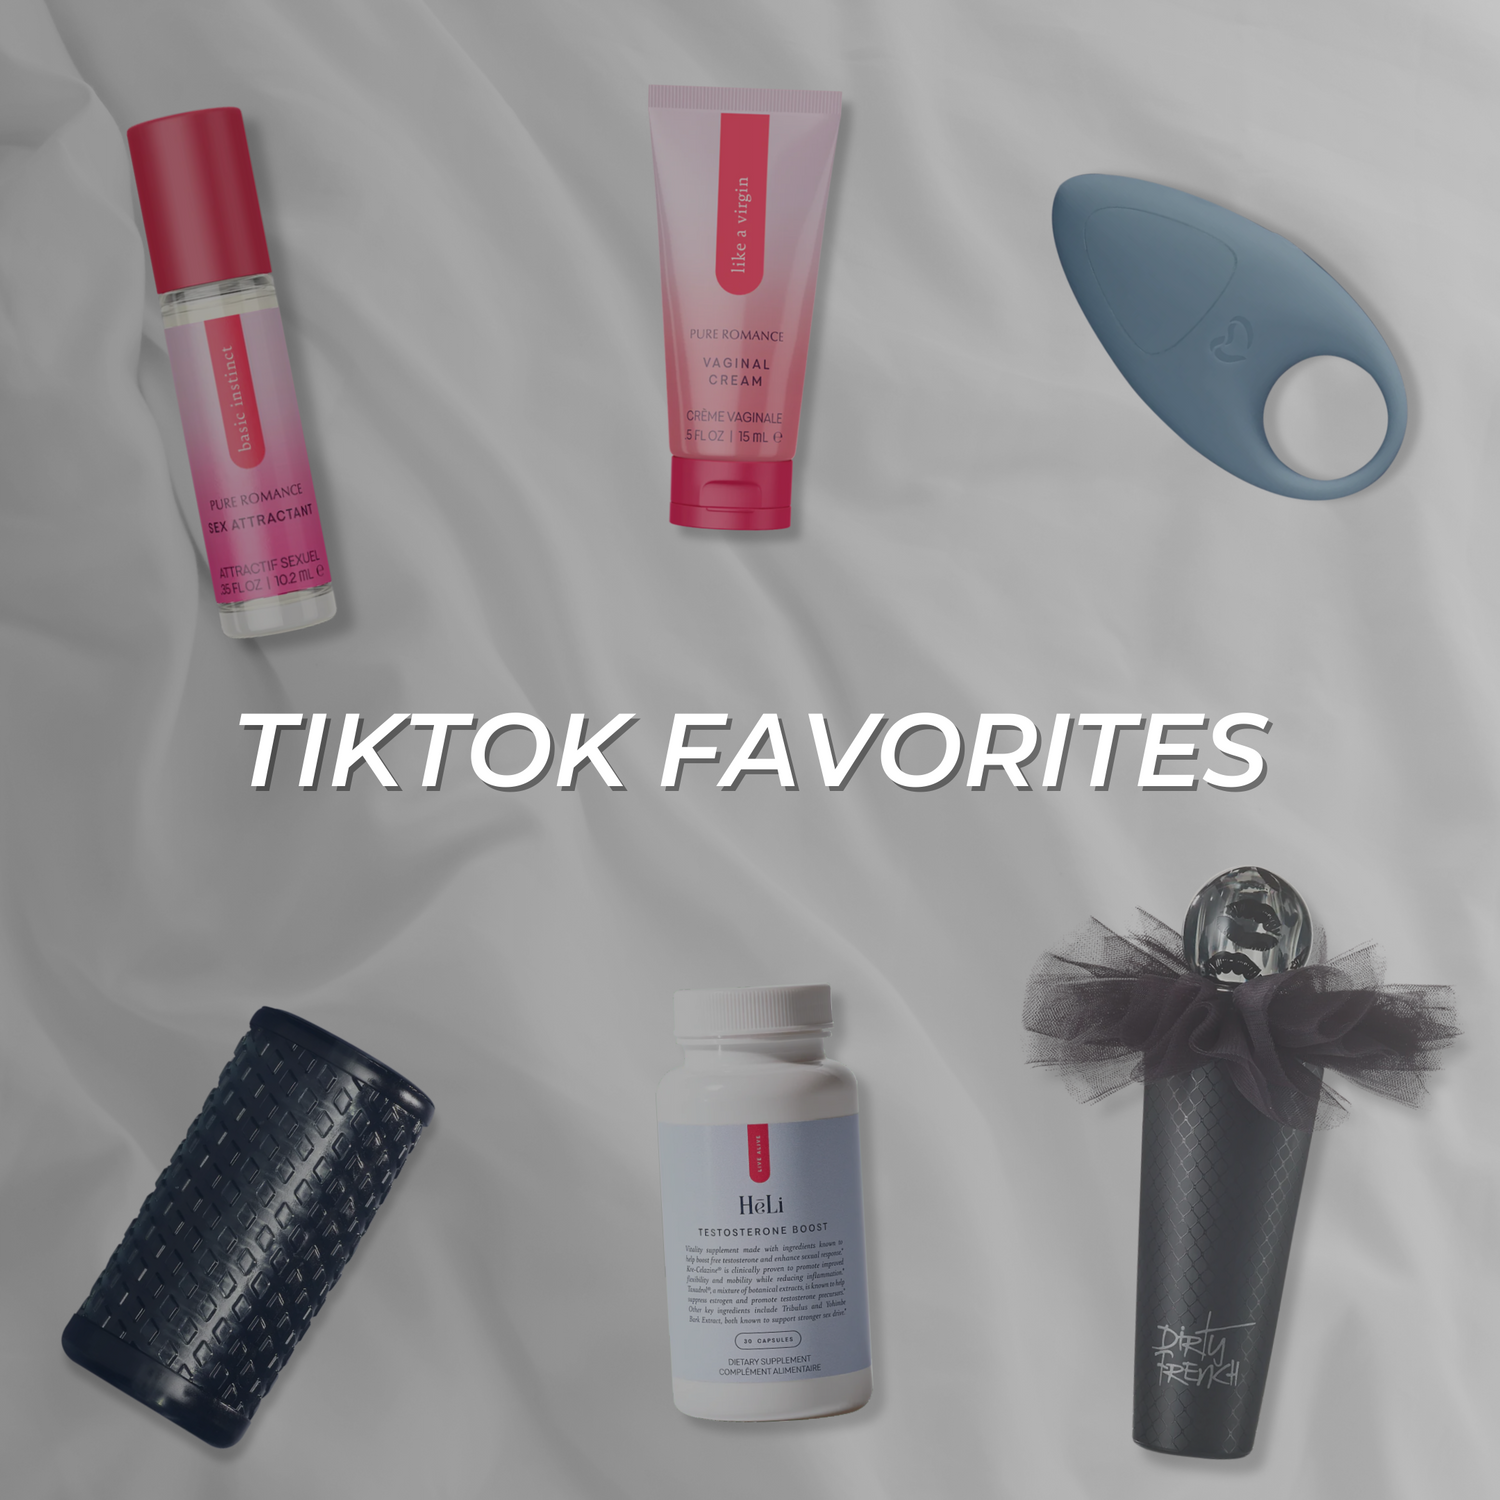 Los Favoritos de Tiktok